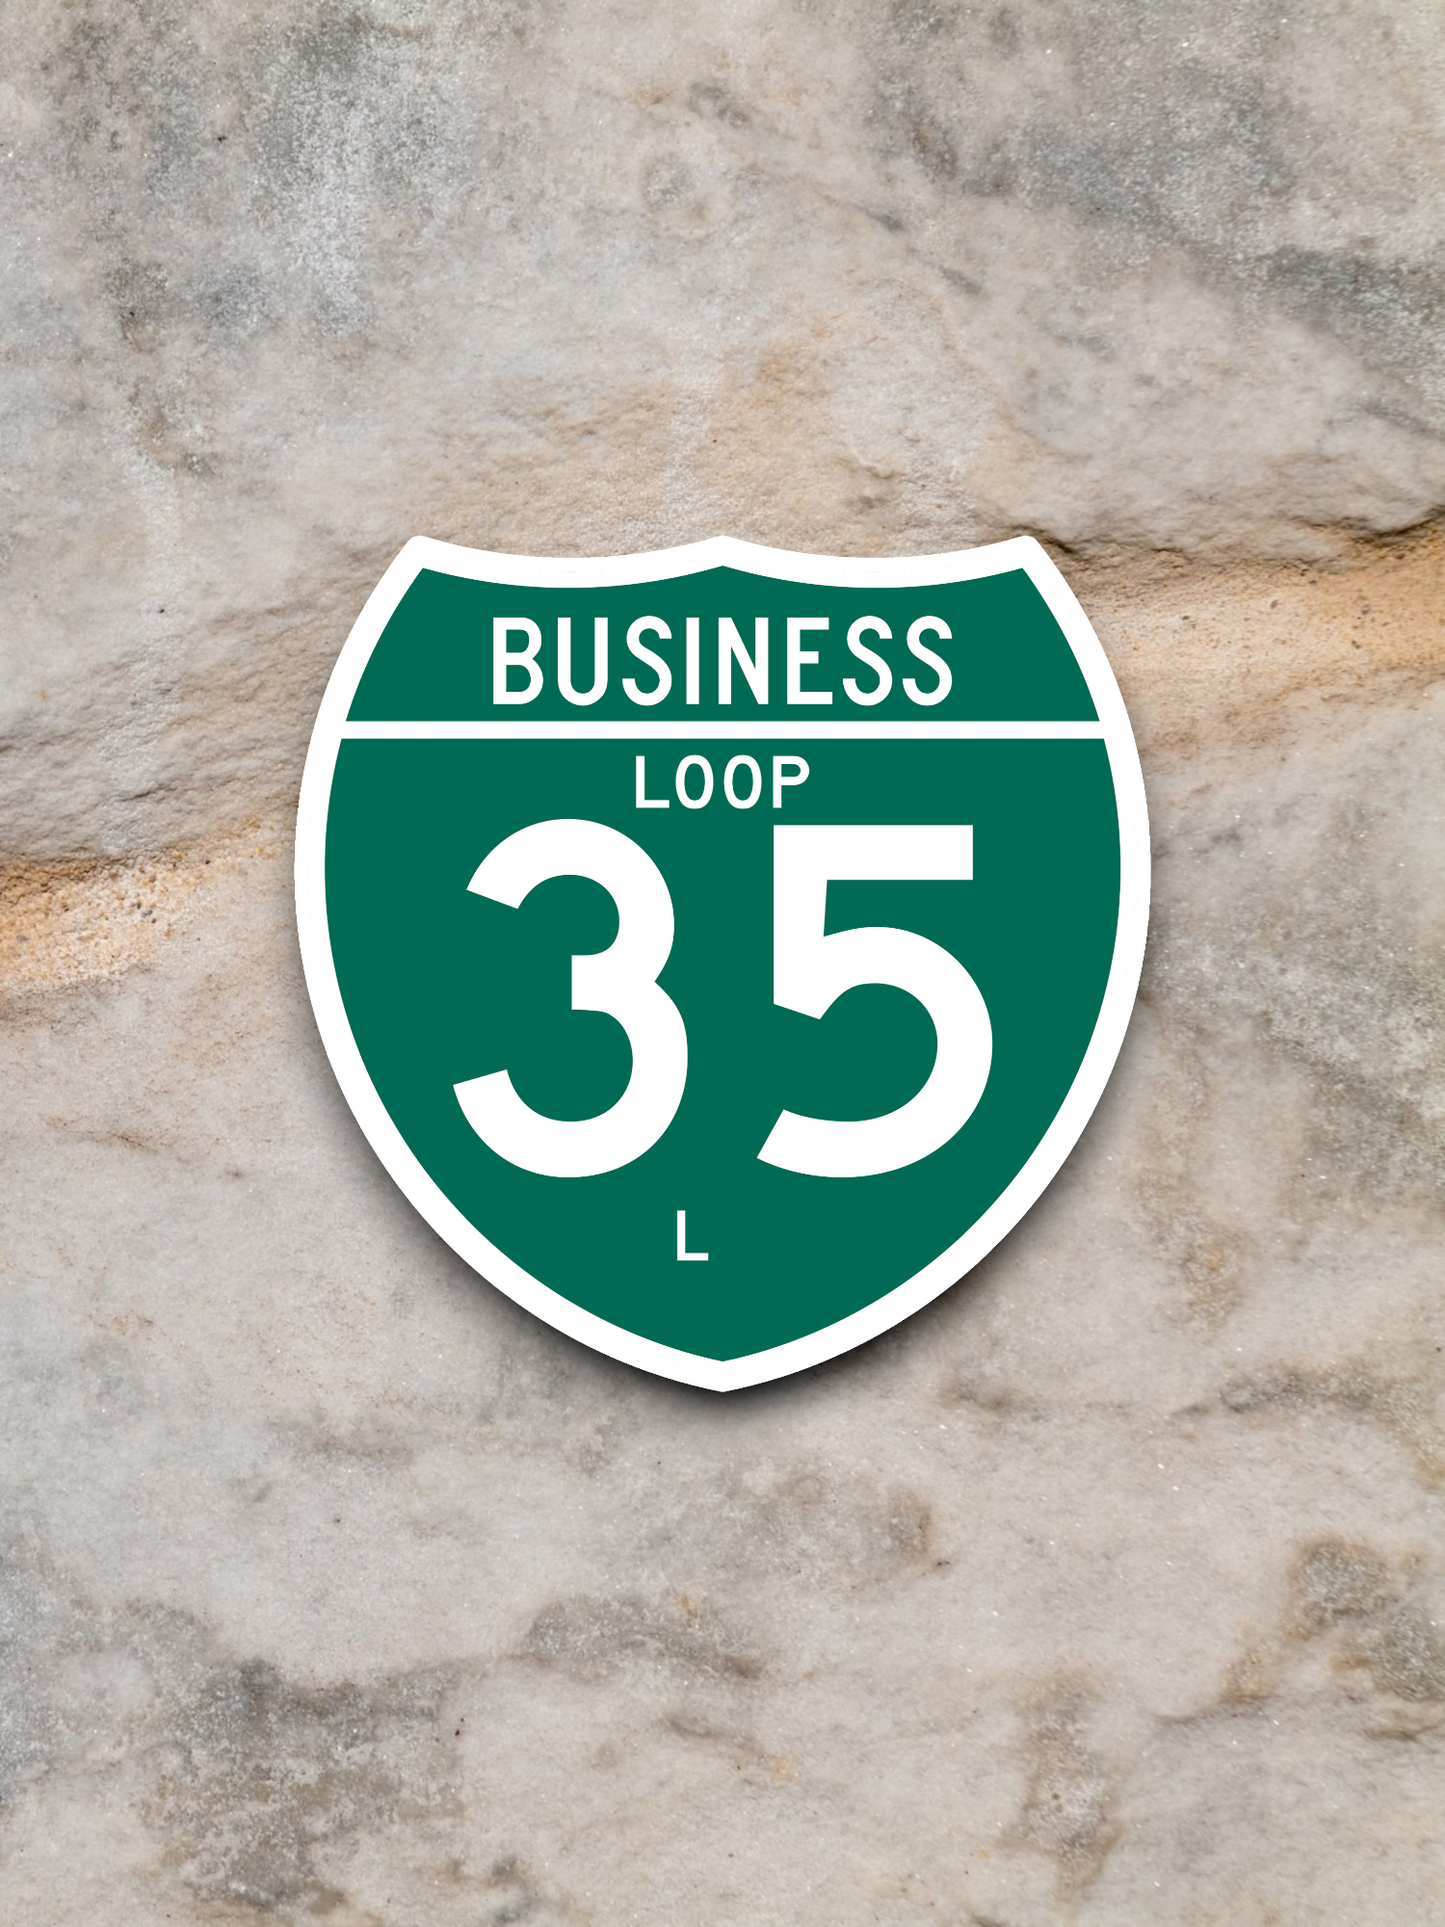 Business Spur Interstate 35-L Texas Road Sign Sticker